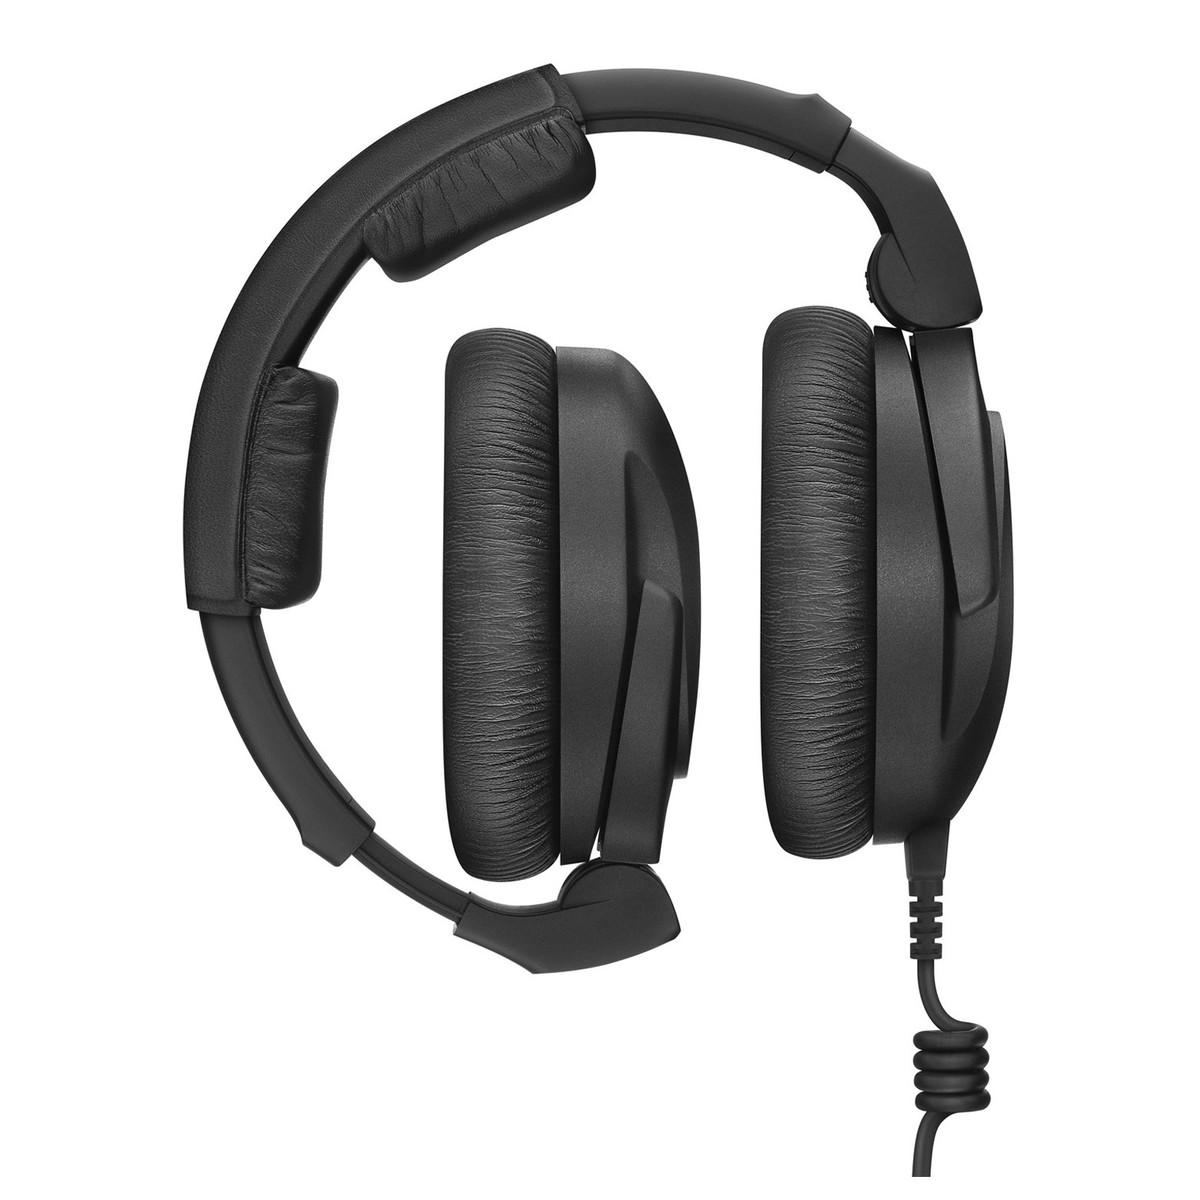 Sennheiser Hd300 Pro - Closed headset - Variation 1